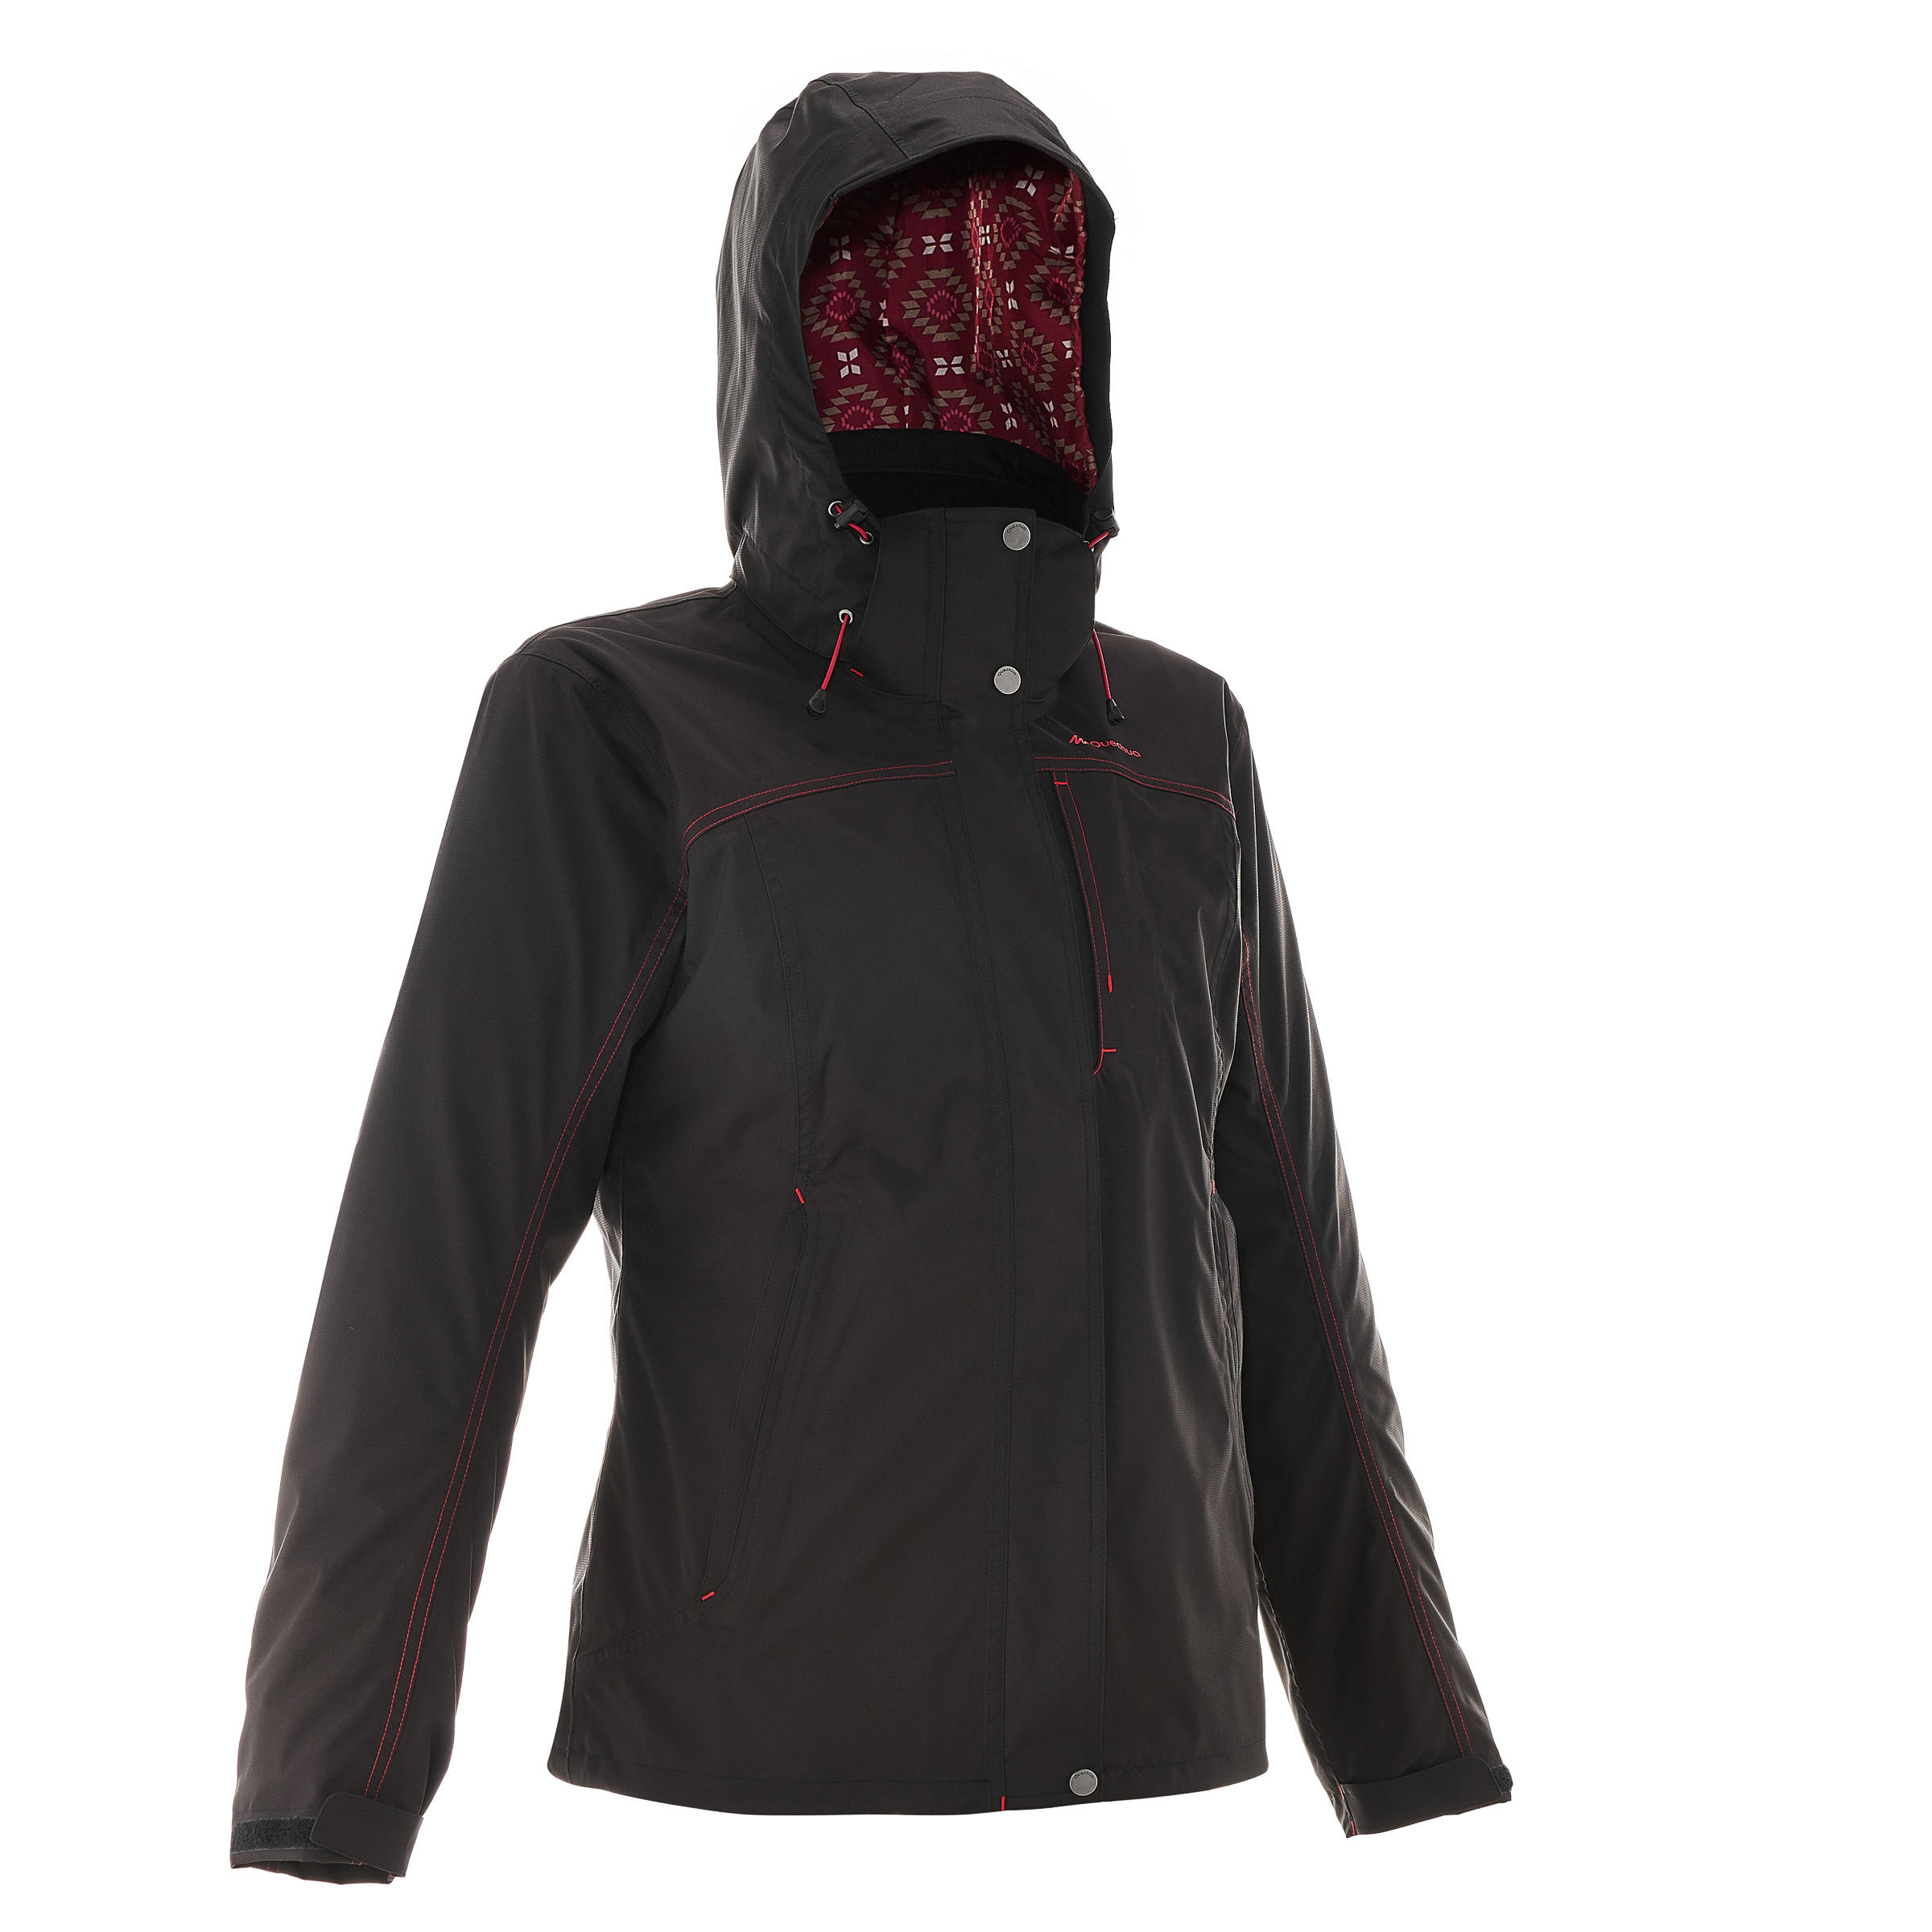 Rainwarm 100 Women's 3-in-1 Trekking Jacket - Black 2/26